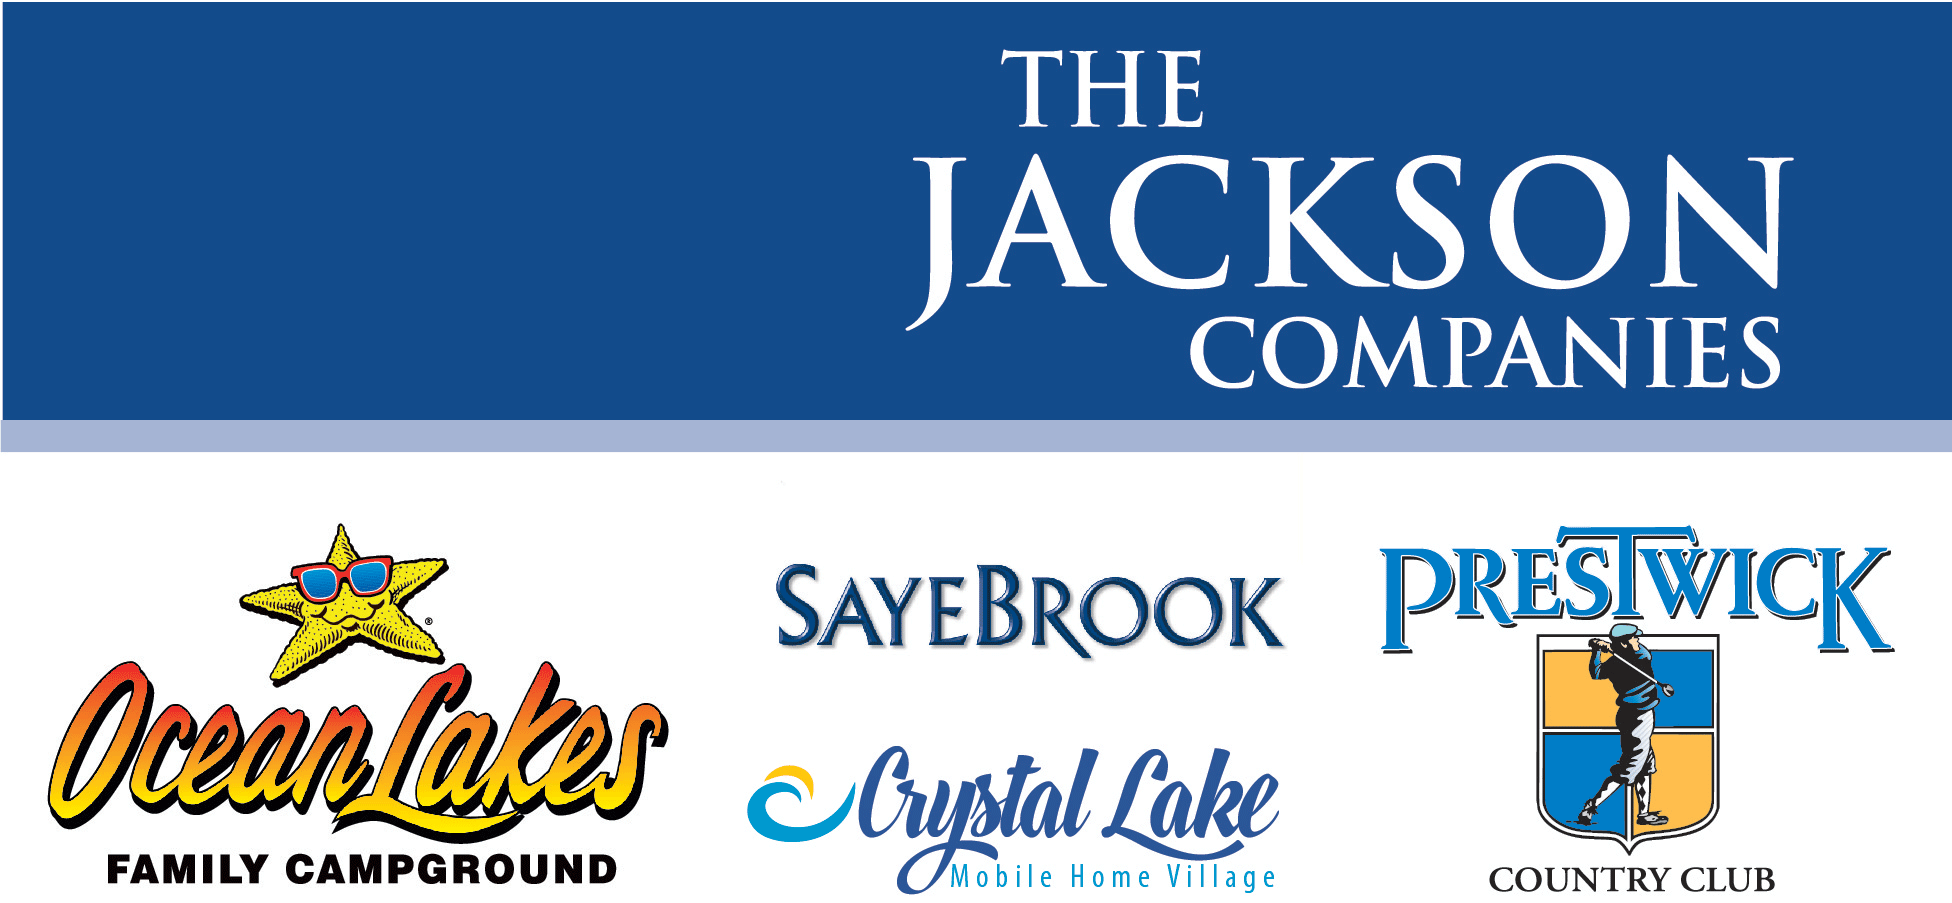 the jackson companies